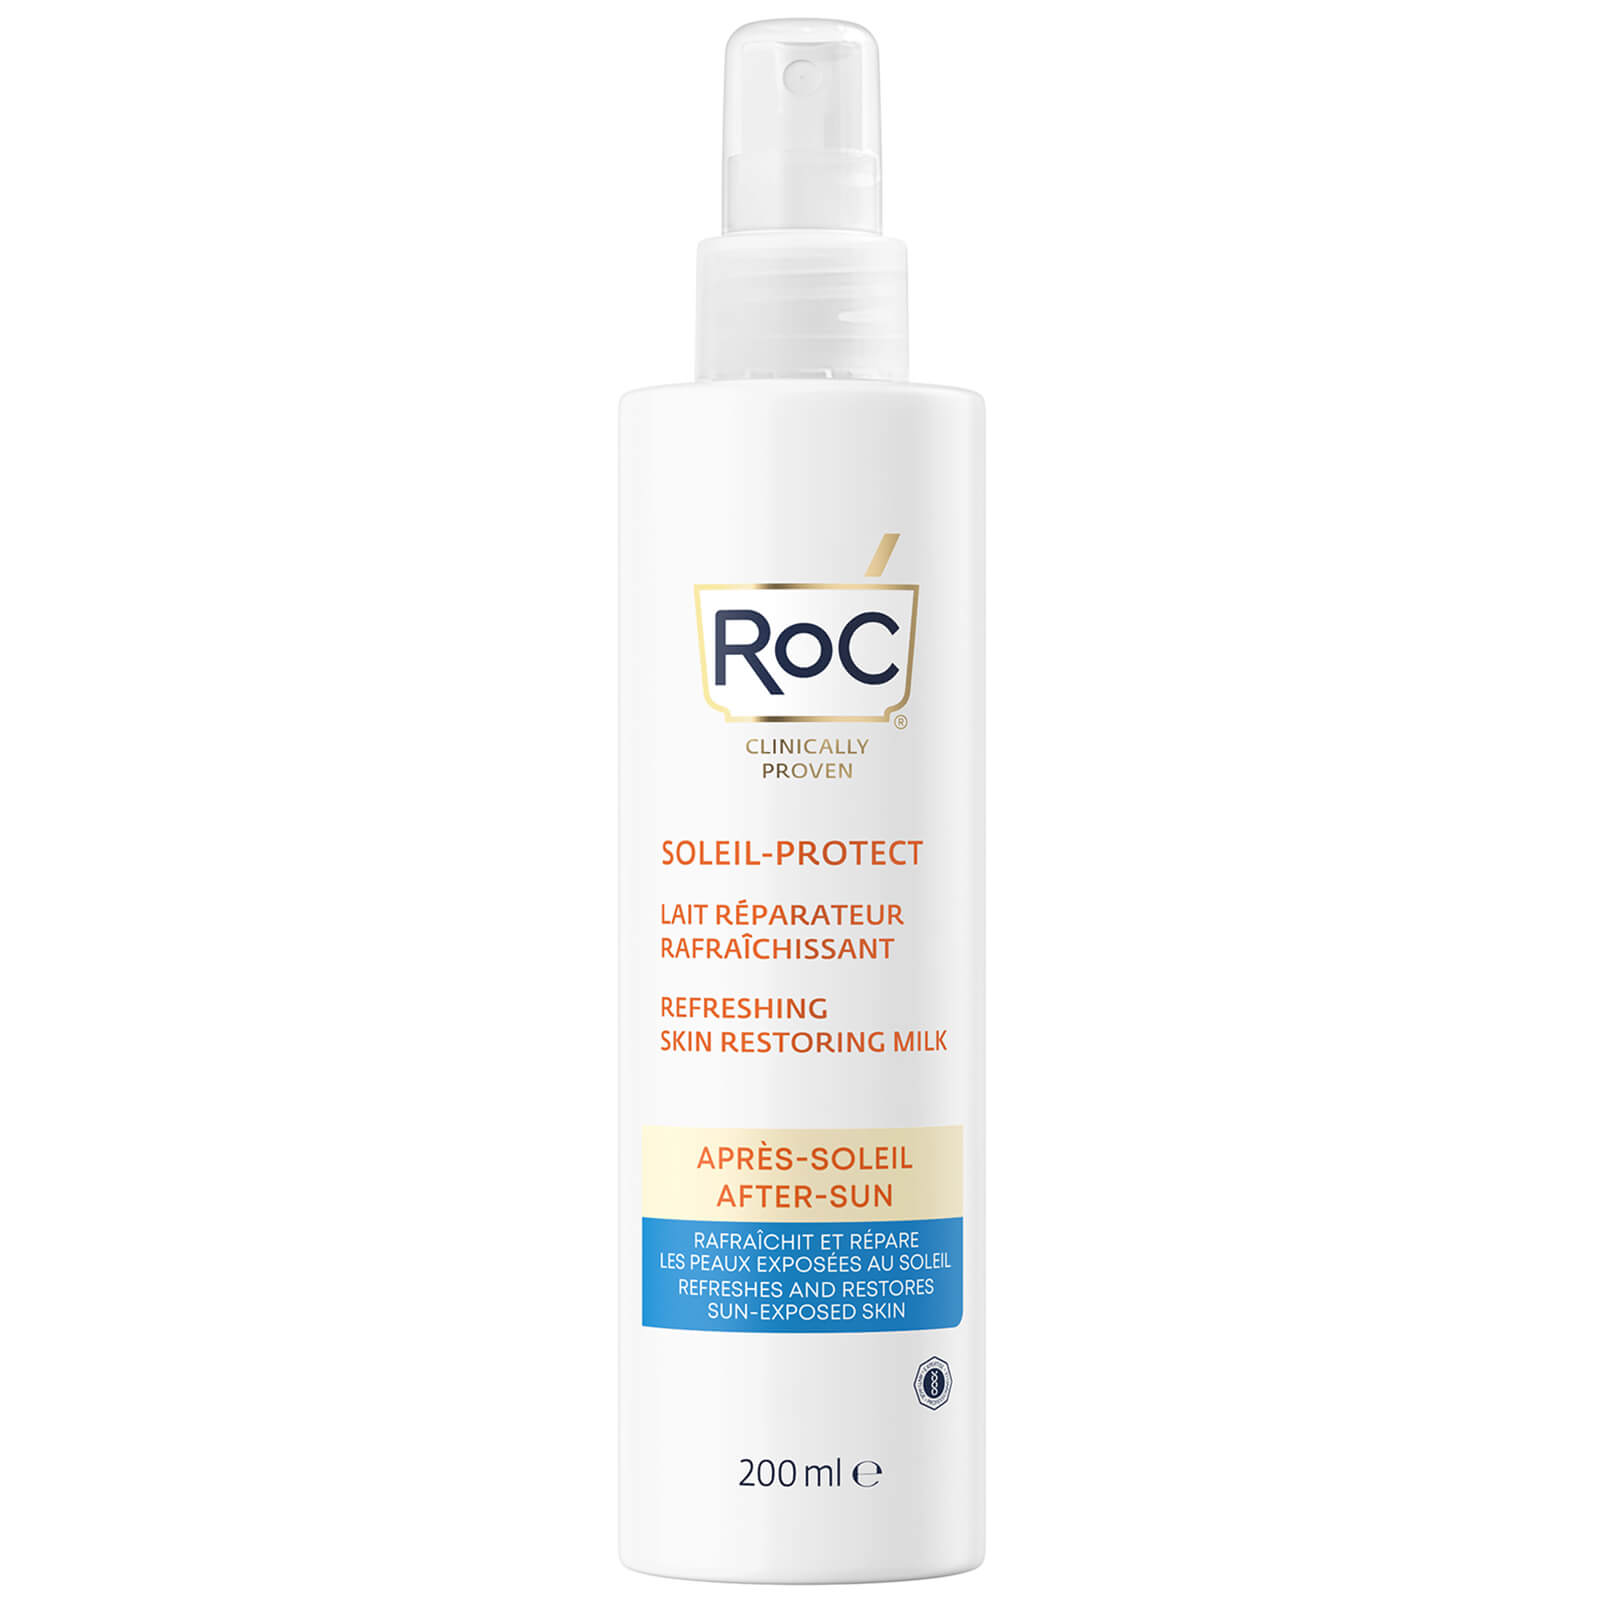 Photos - Sun Skin Care RoC Soleil-Protect Refreshing Skin Restoring Milk After-Sun 200ml 2845400 